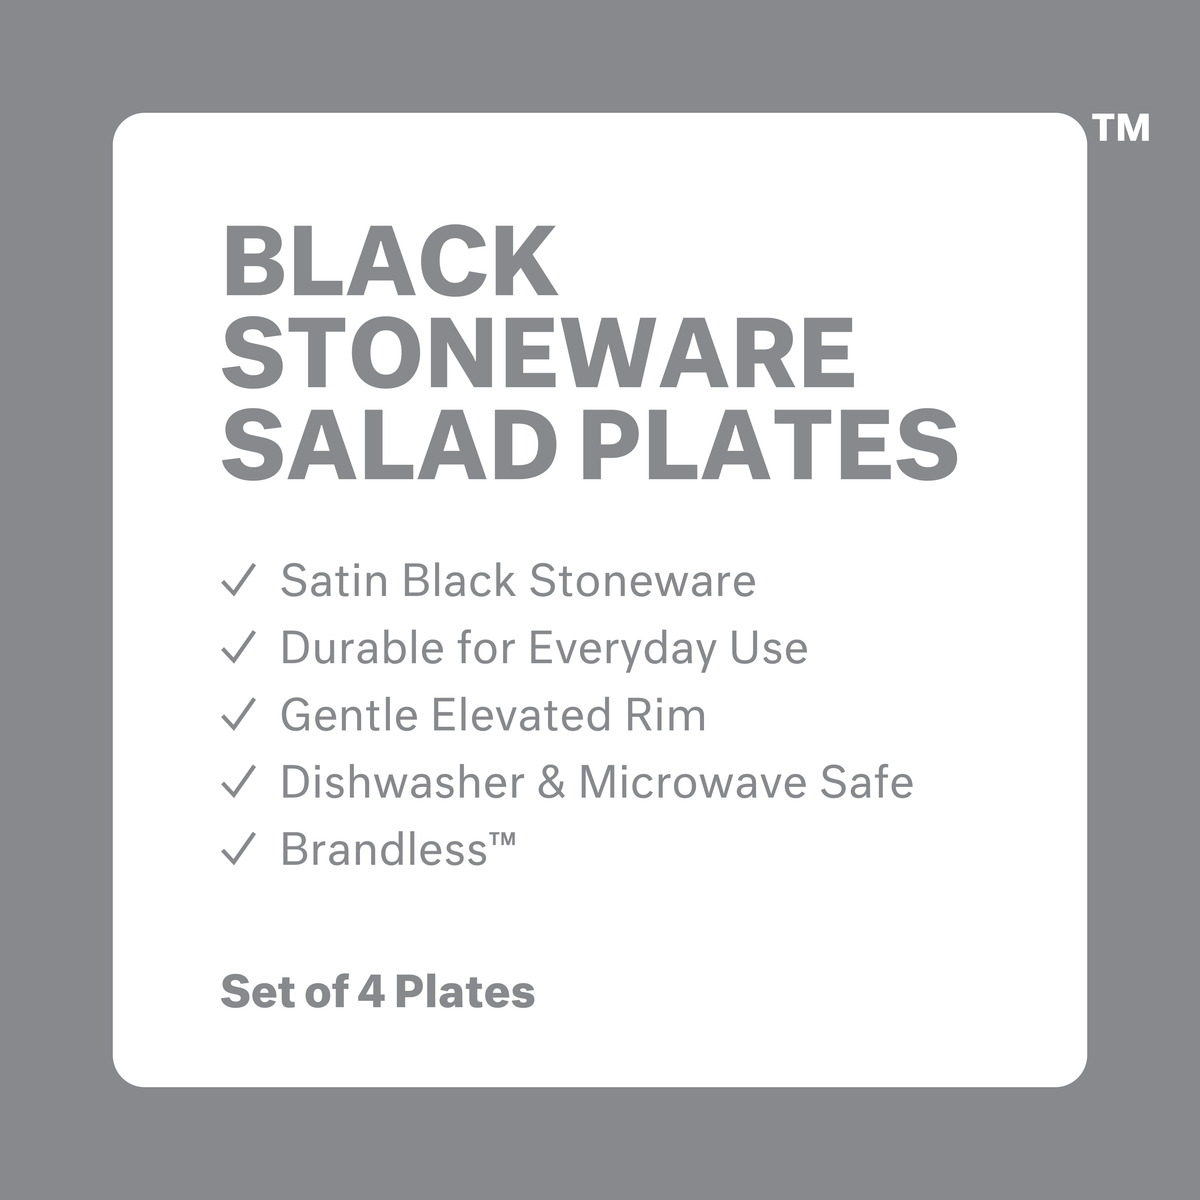 Black stoneware salad plates: satin black stoneware, durable for everyday use, Gentle elevated rim, dishwasher and microwave safe, brandless. Set of 4 plates.